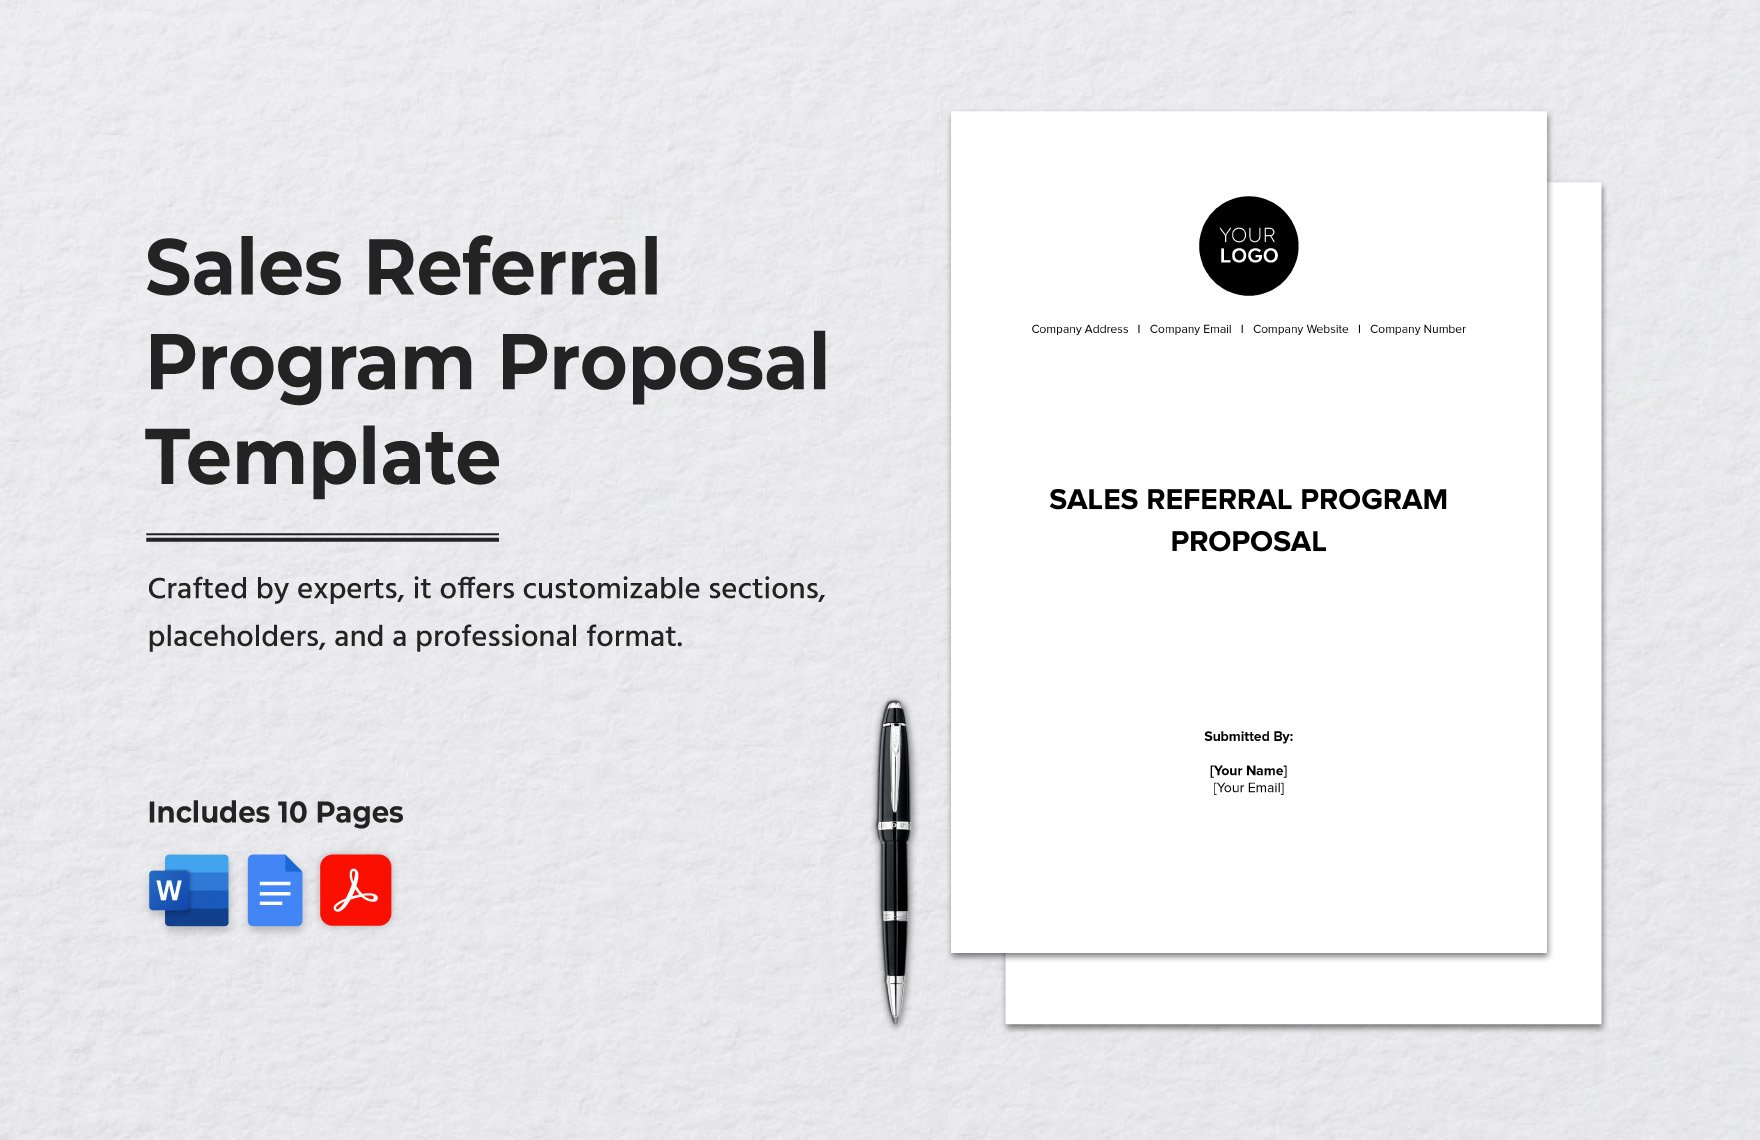 Sales Referral Program Proposal Template